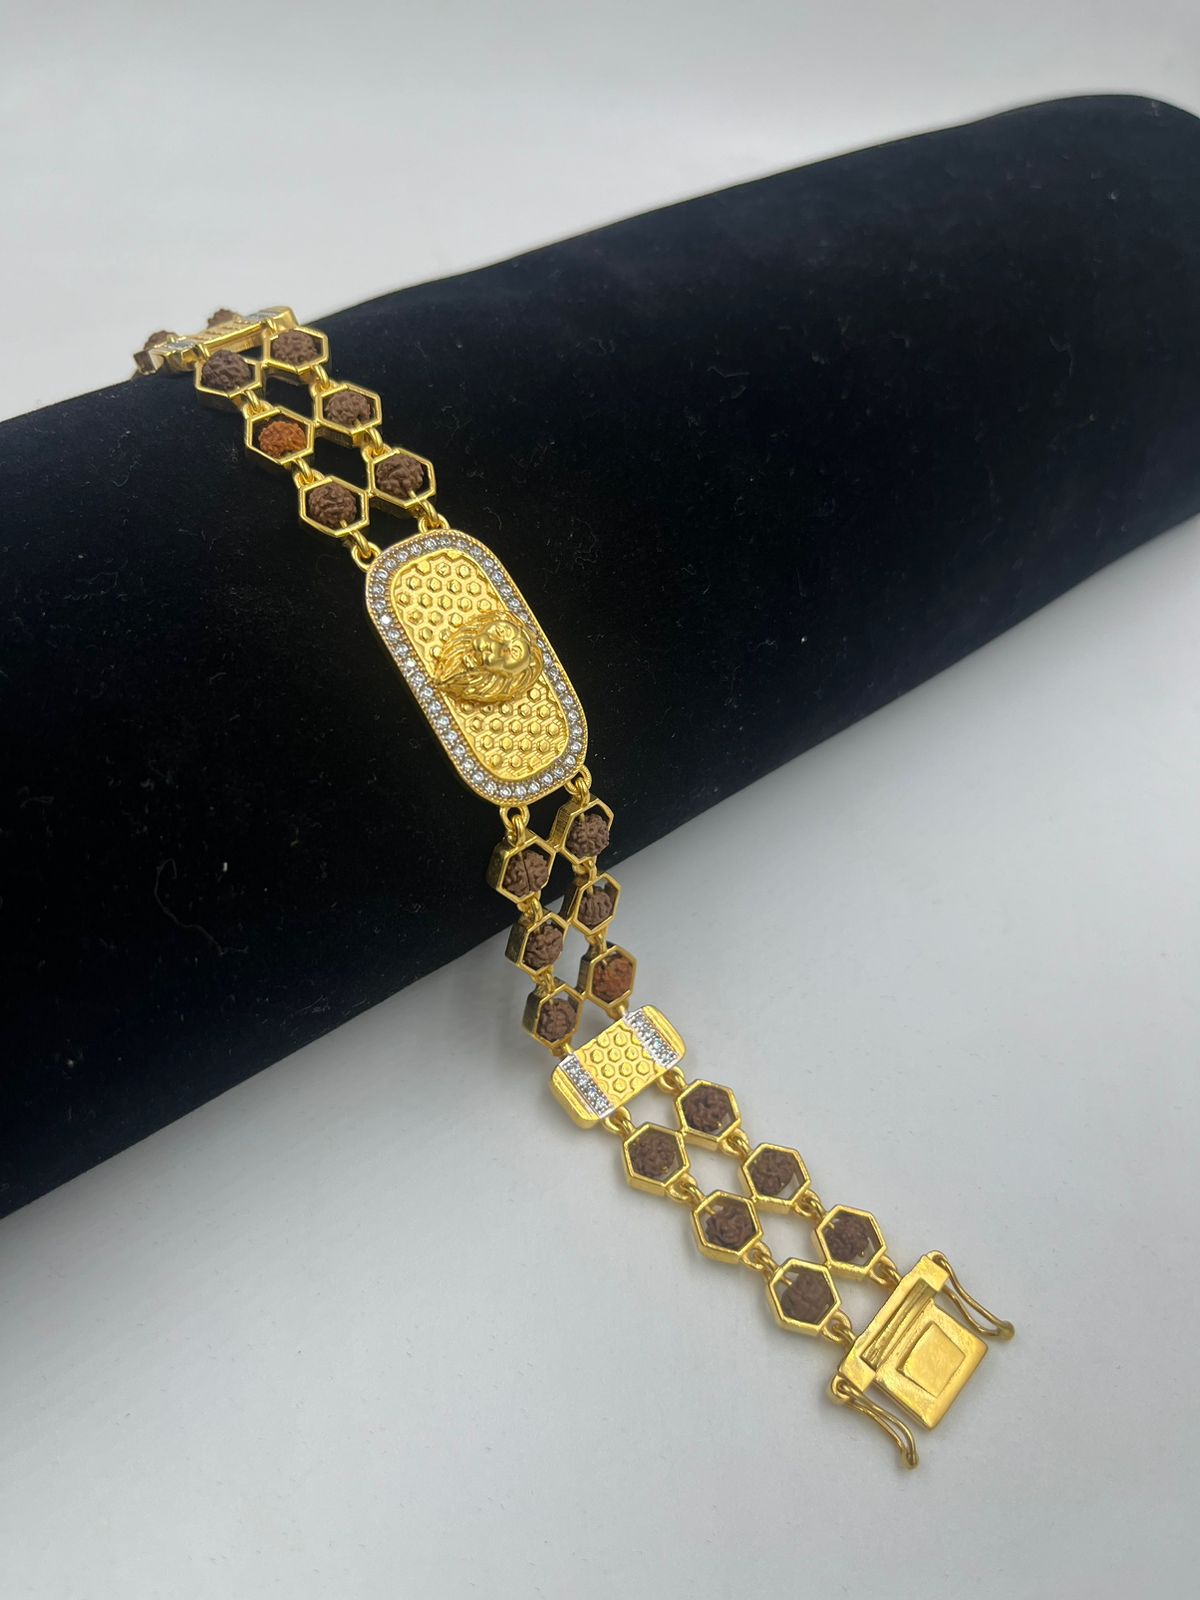 1 Gram Gold Plated Triangle Popular Design Rudraksha Bracelet For Men -  Style C713, Rudraksh Bracelet, रुद्राक्ष ब्रेसलेट - Soni Fashion, Rajkot |  ID: 2852140391133